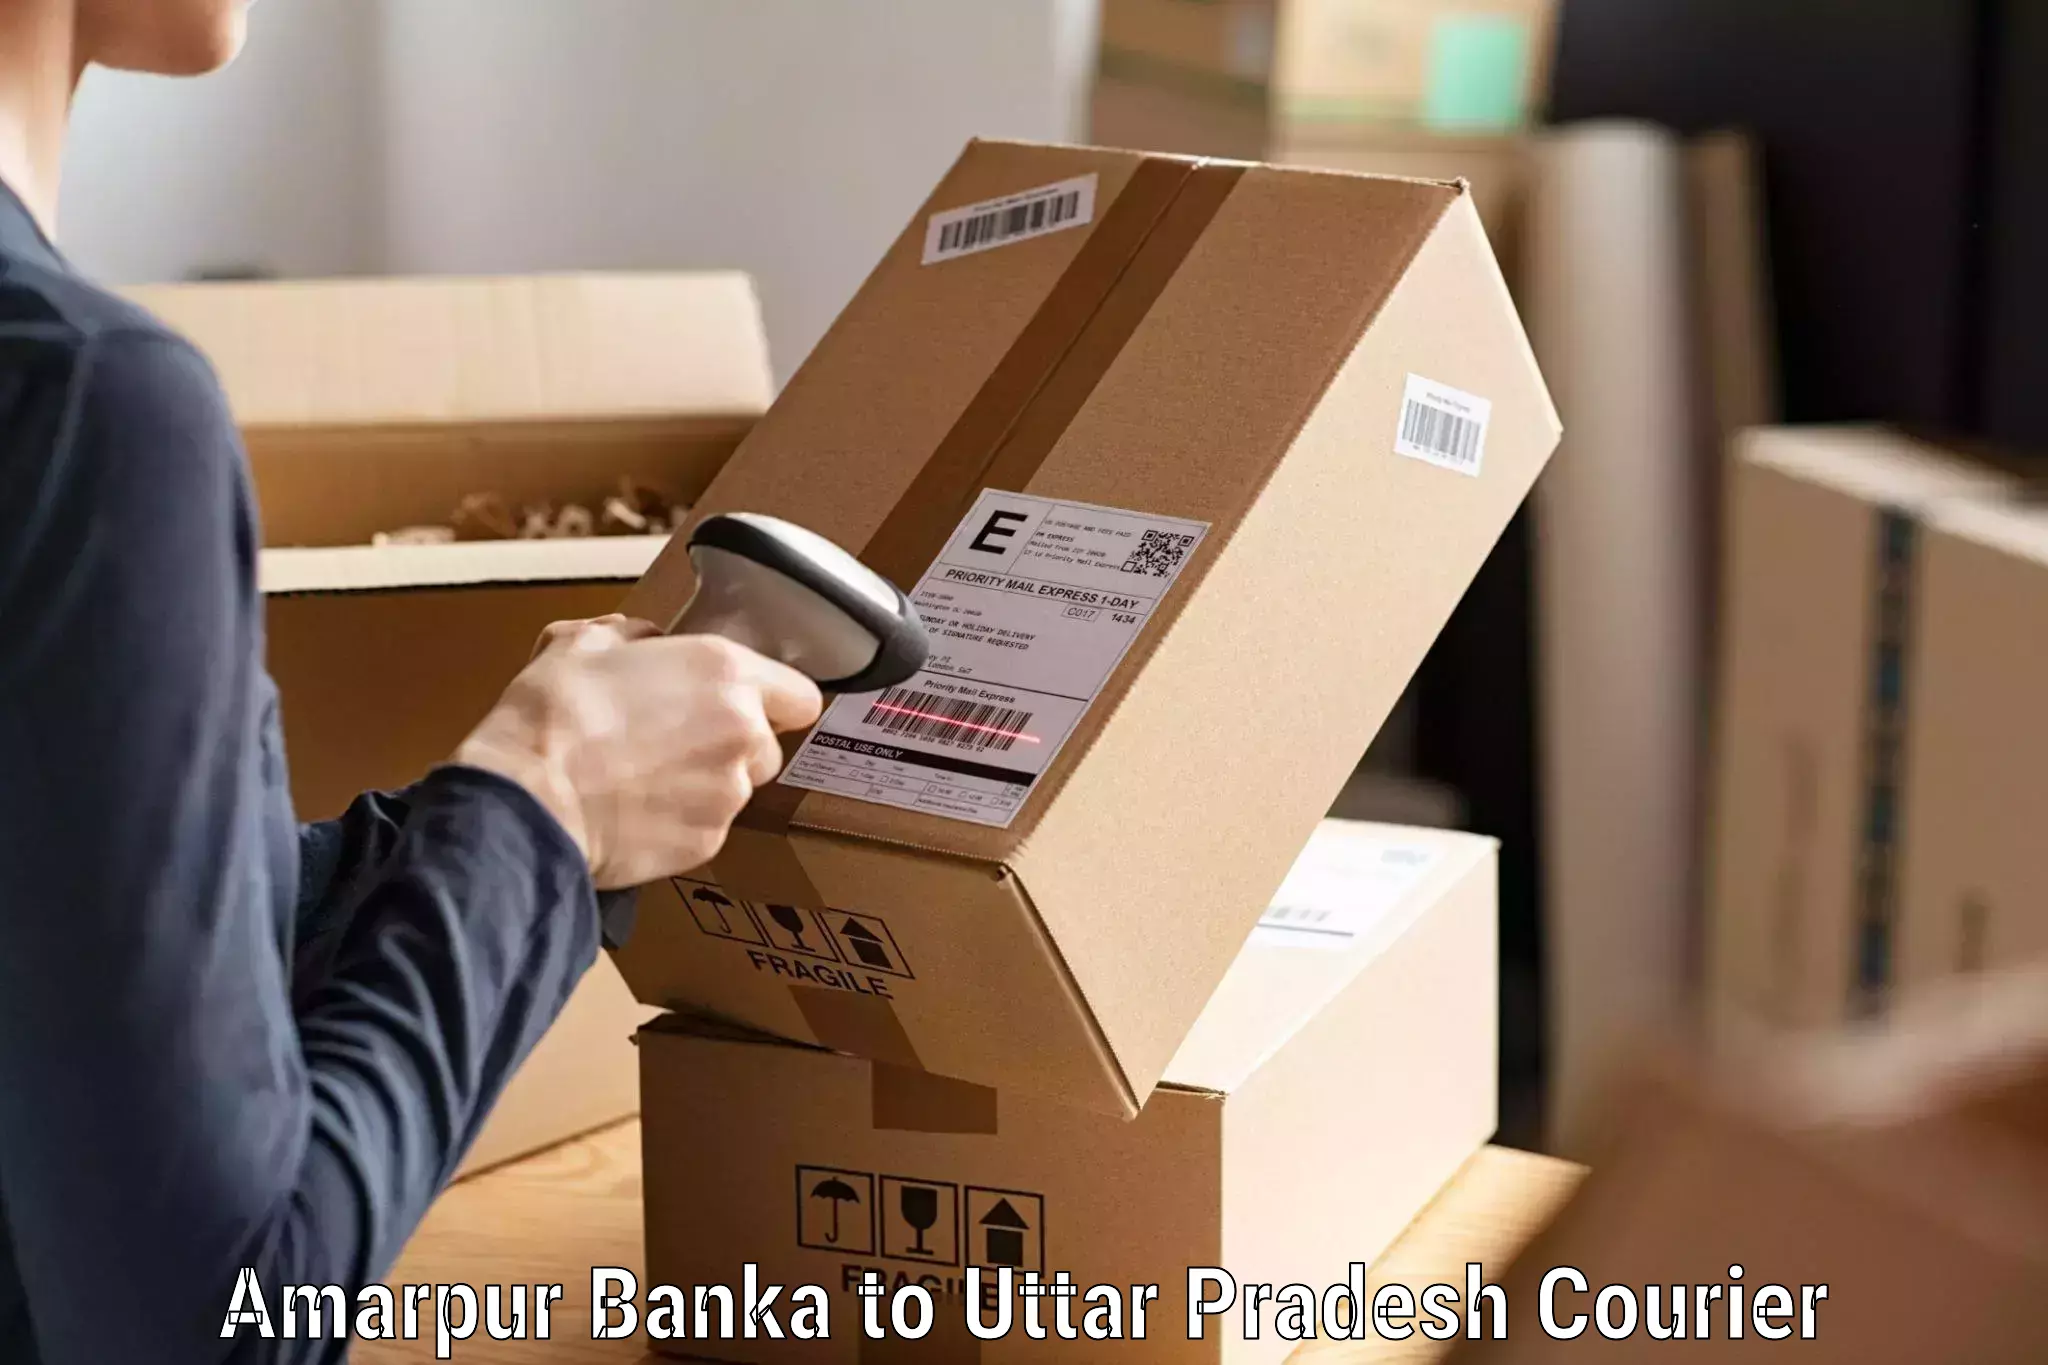 Global courier networks Amarpur Banka to Varanasi